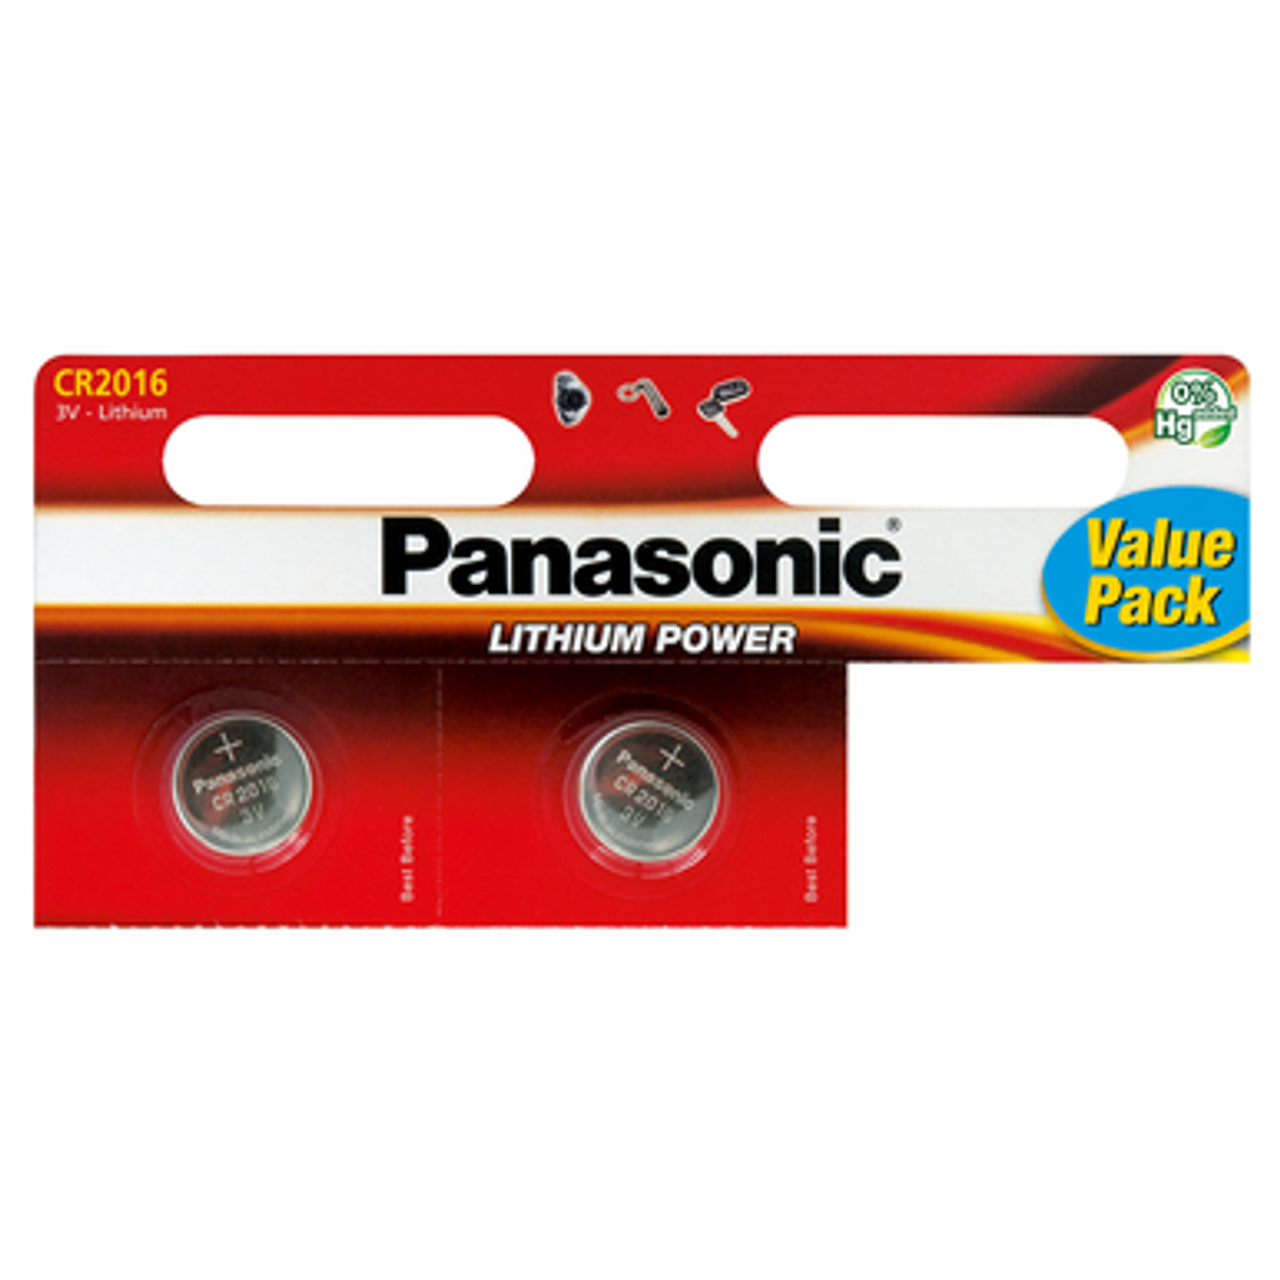 6 X Panasonic Cr2016 3V Lithium Batteries